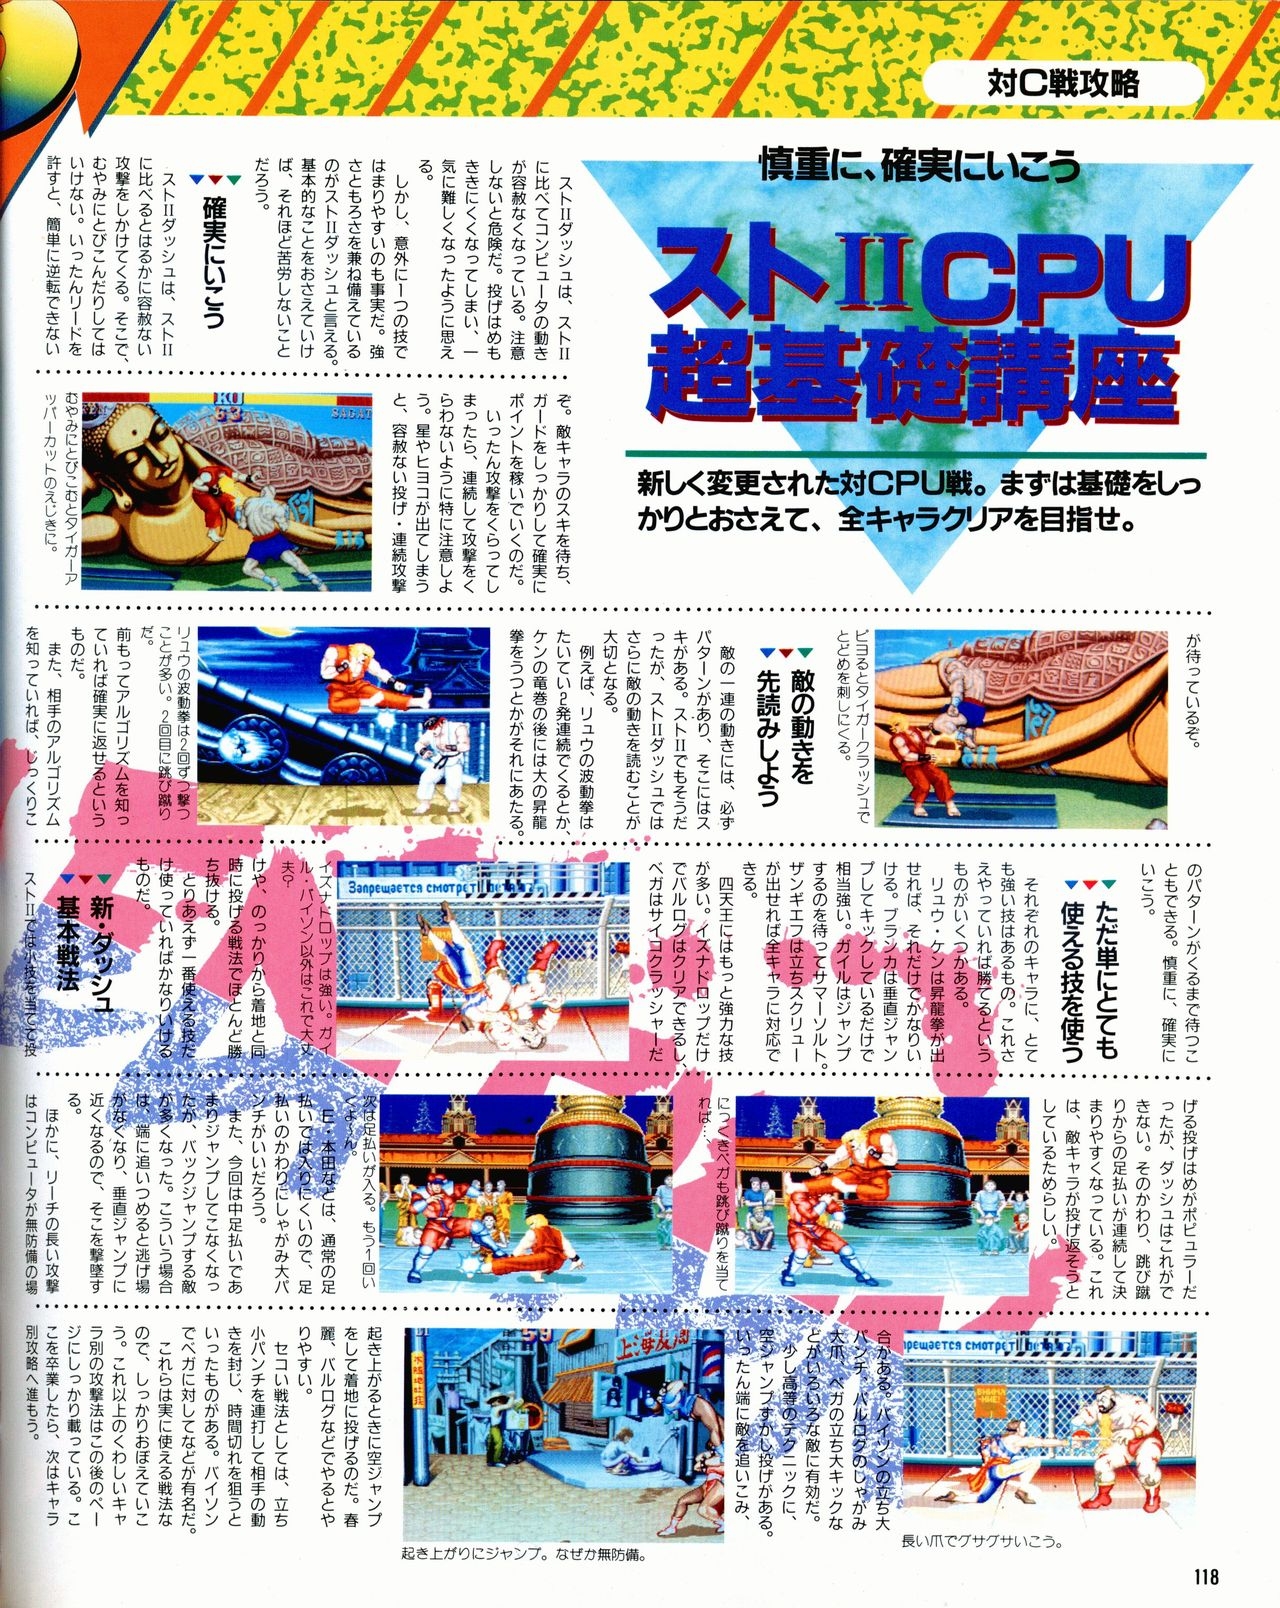 Street Fighter II Dash - Gamest special issue 77 119